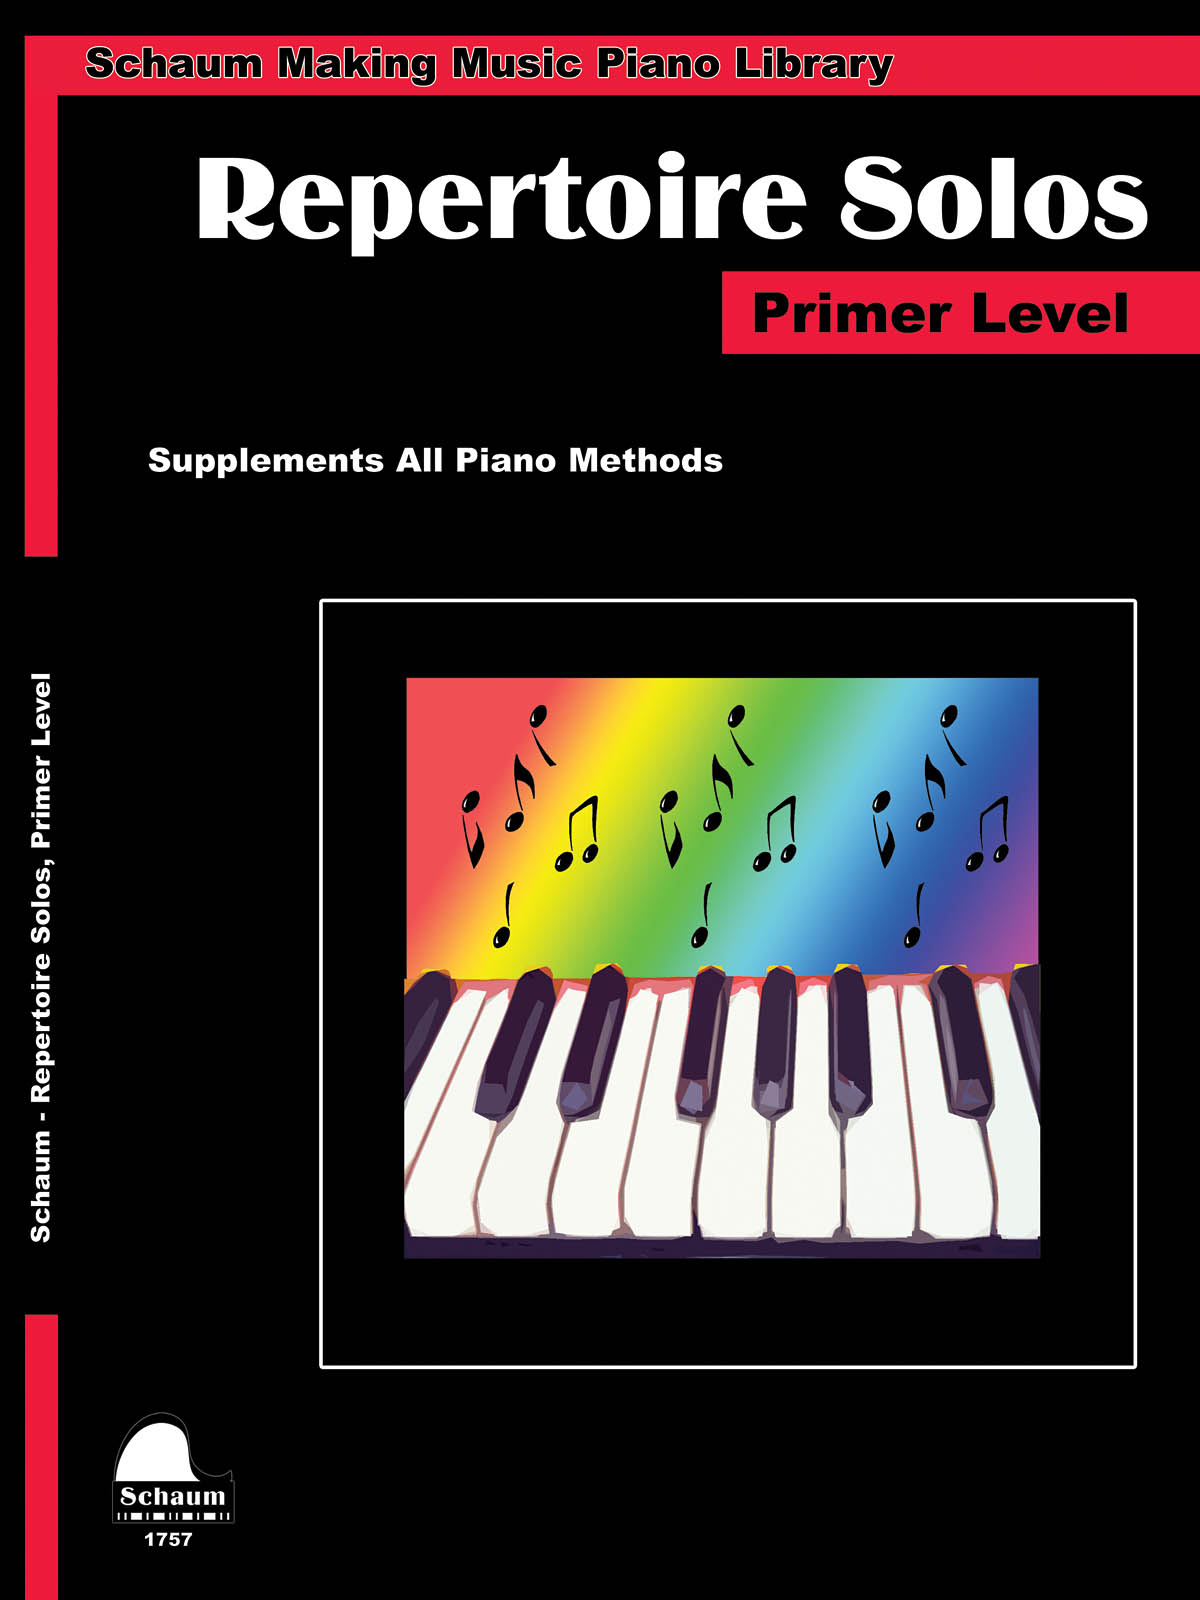 Repertoire Solos Primer Level